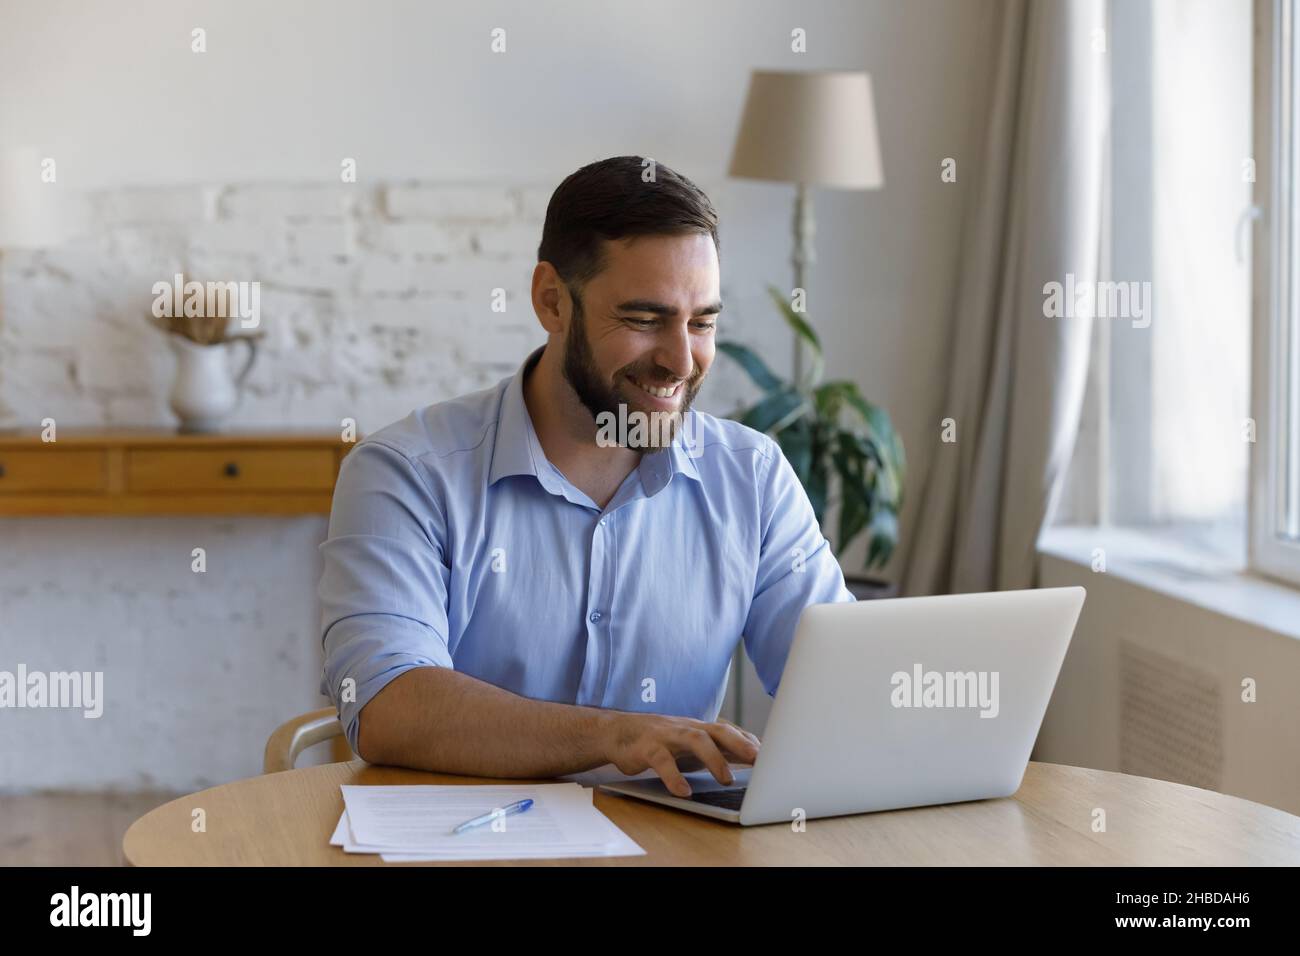 Smiling millennial businessman enjoying working on computer. Stock Photo